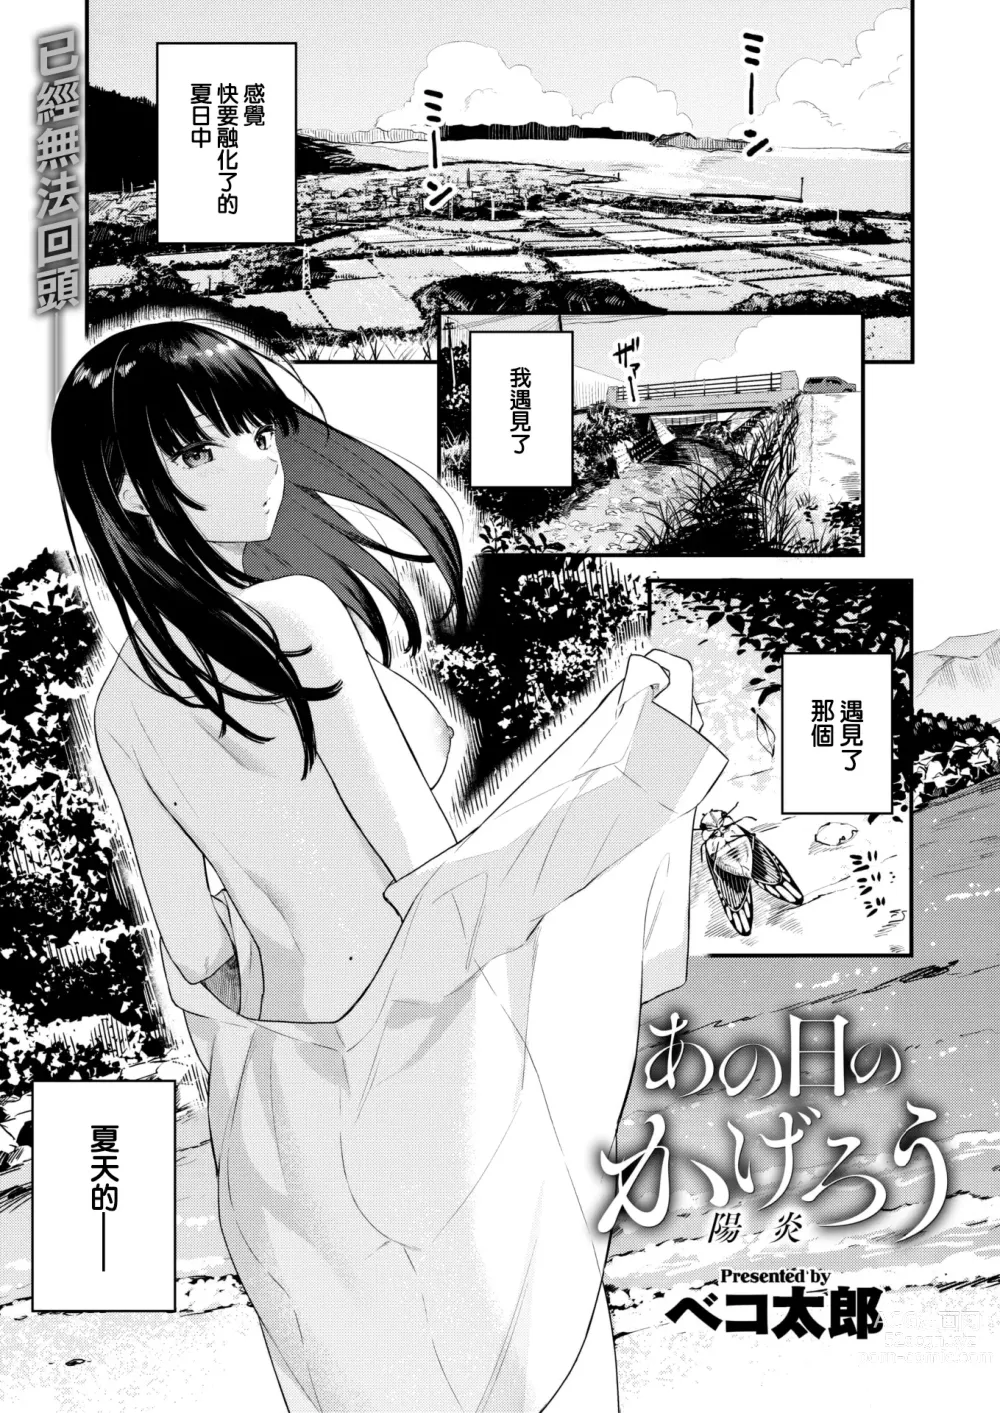 Page 2 of manga Anohi no kagero